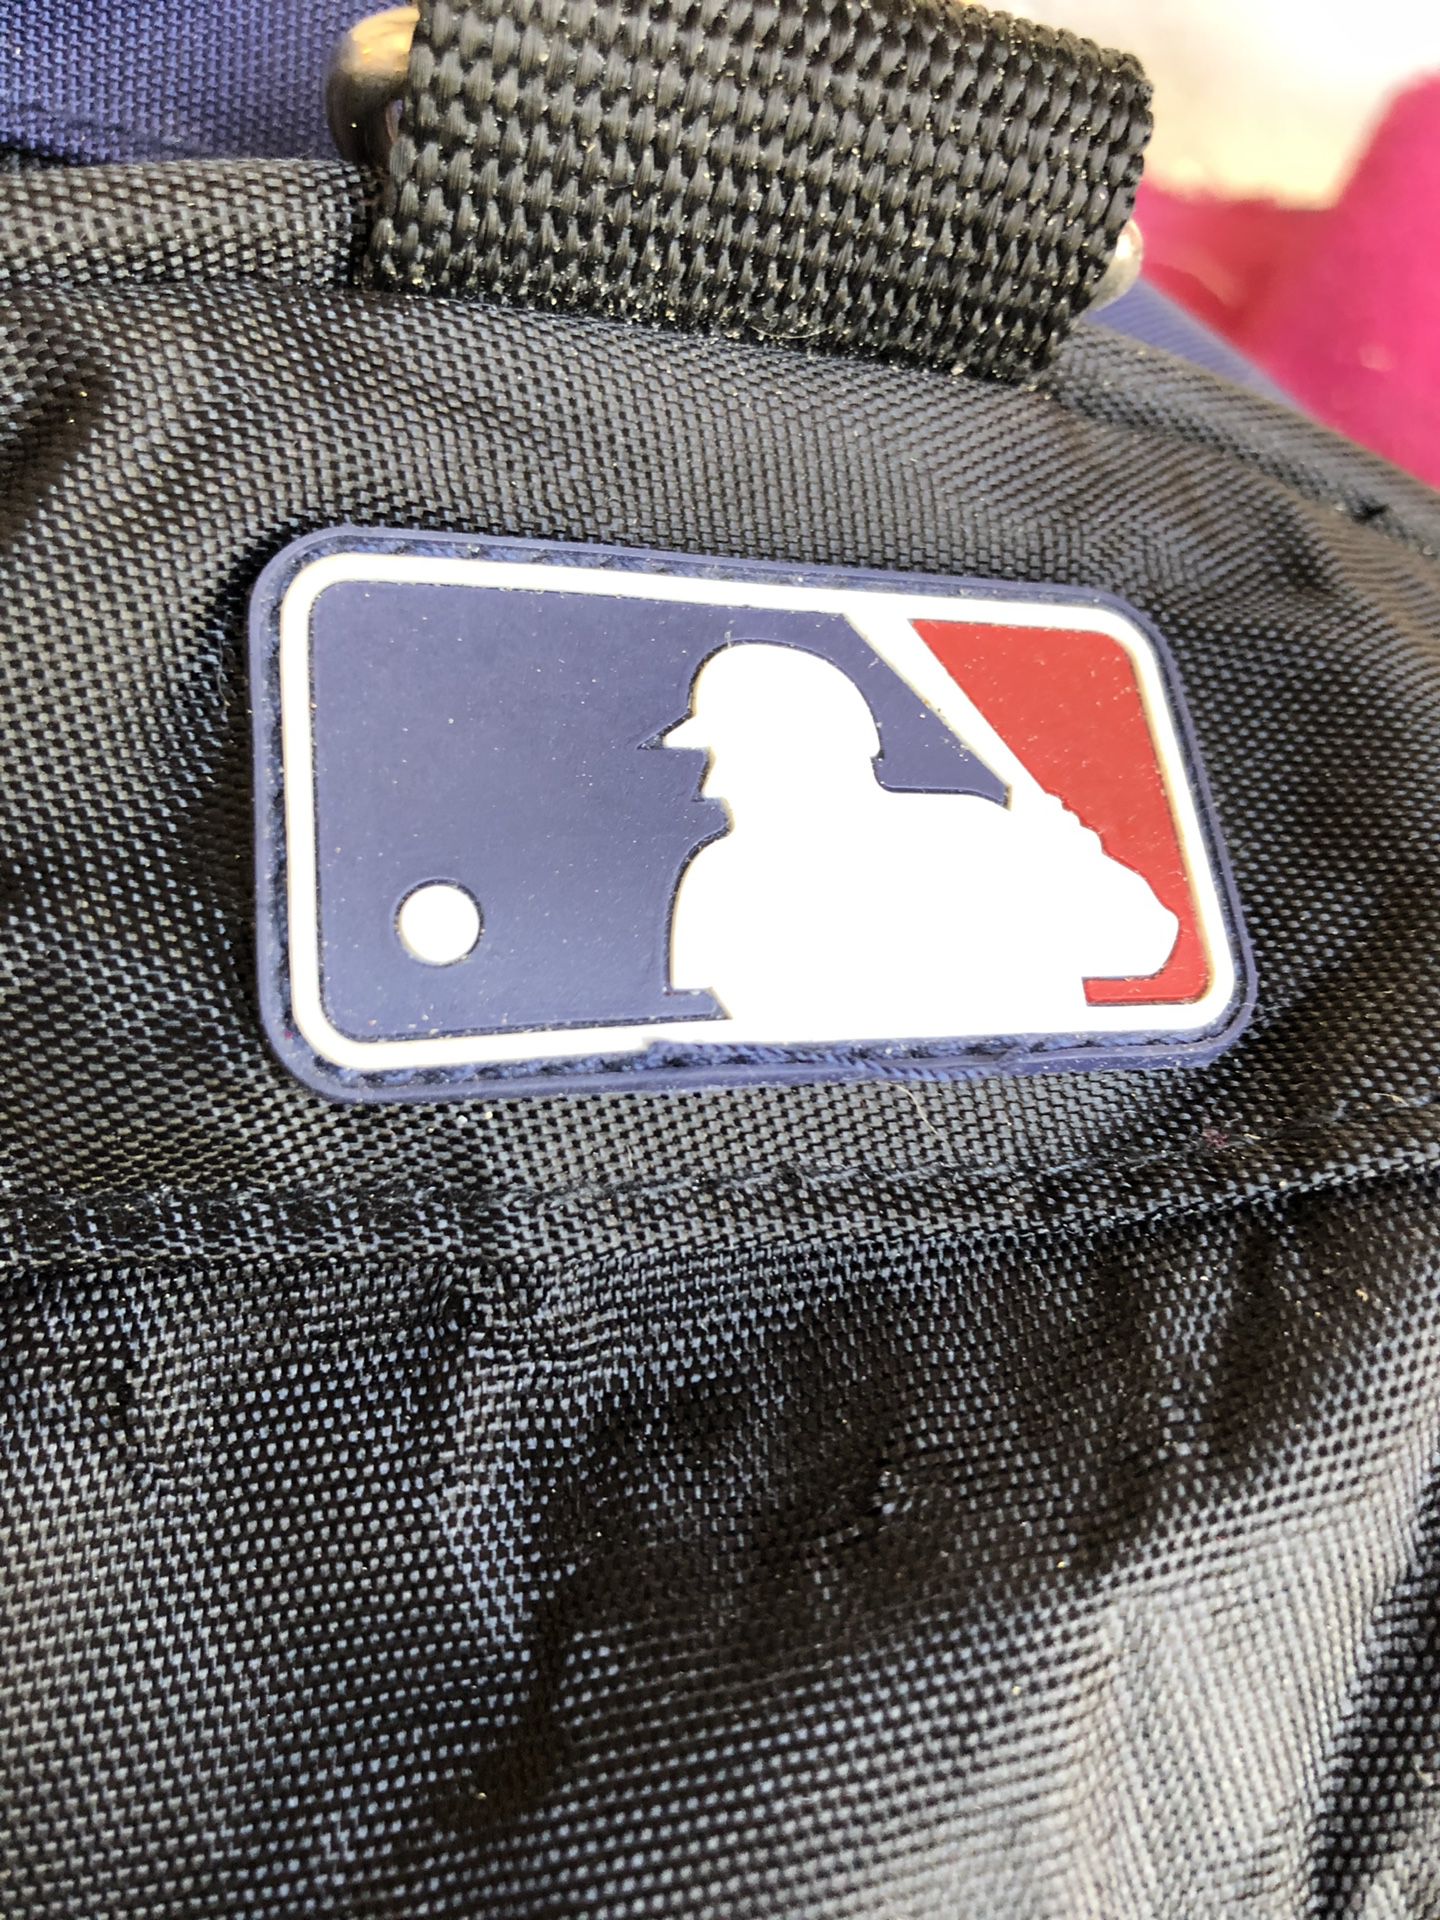 Major League Baseball 2002 All Star Game Duffle Bag